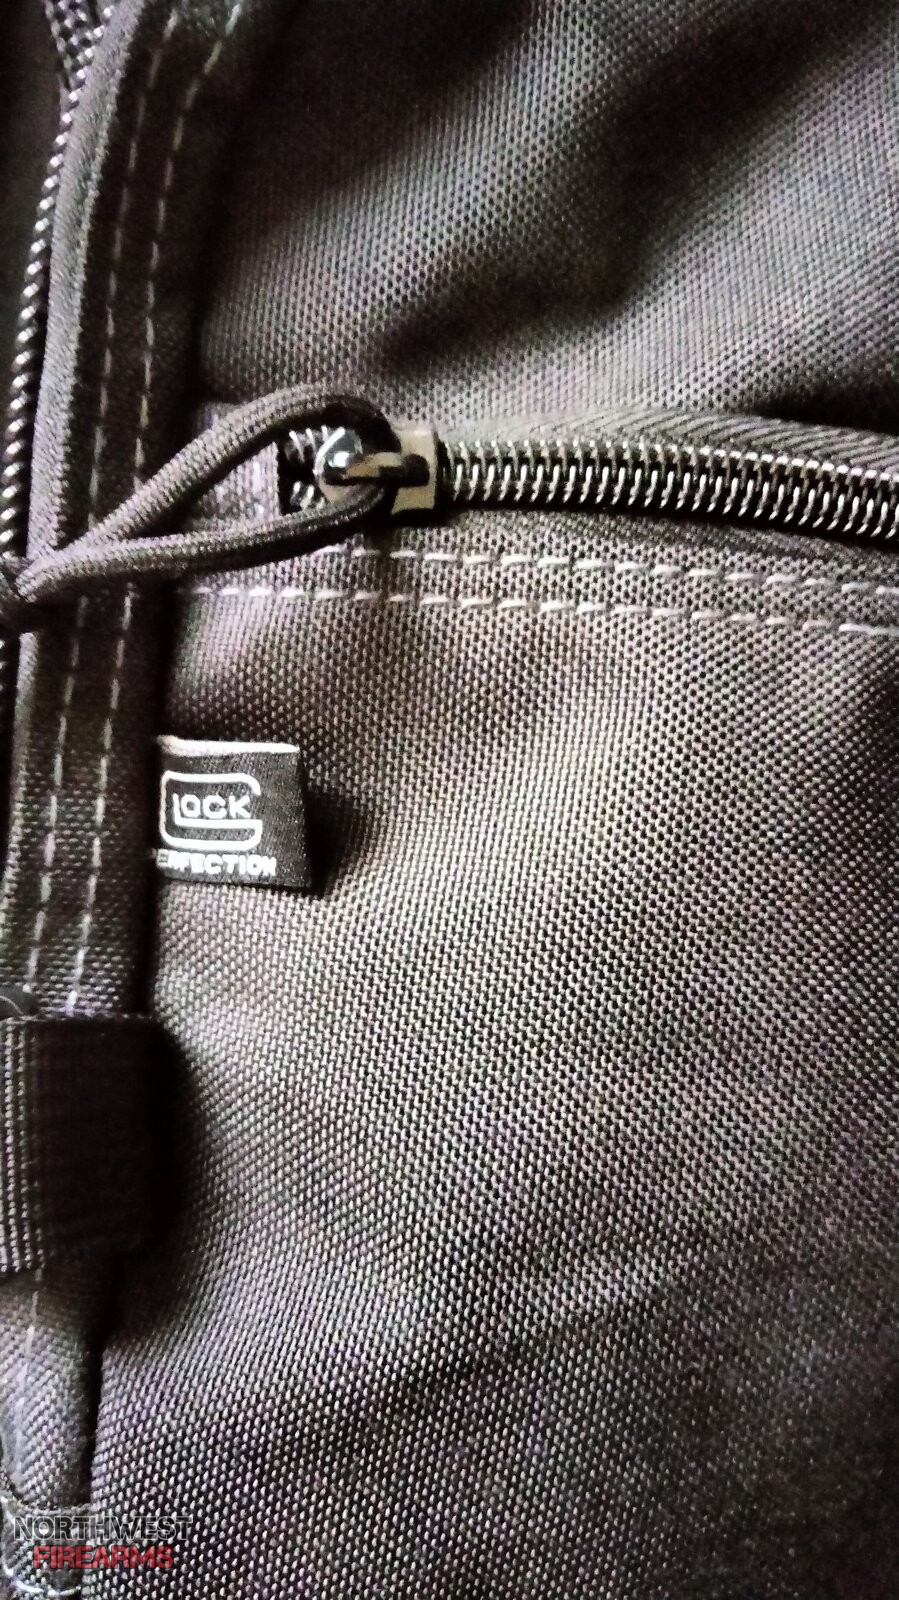 New Glock backpack | Northwest Firearms